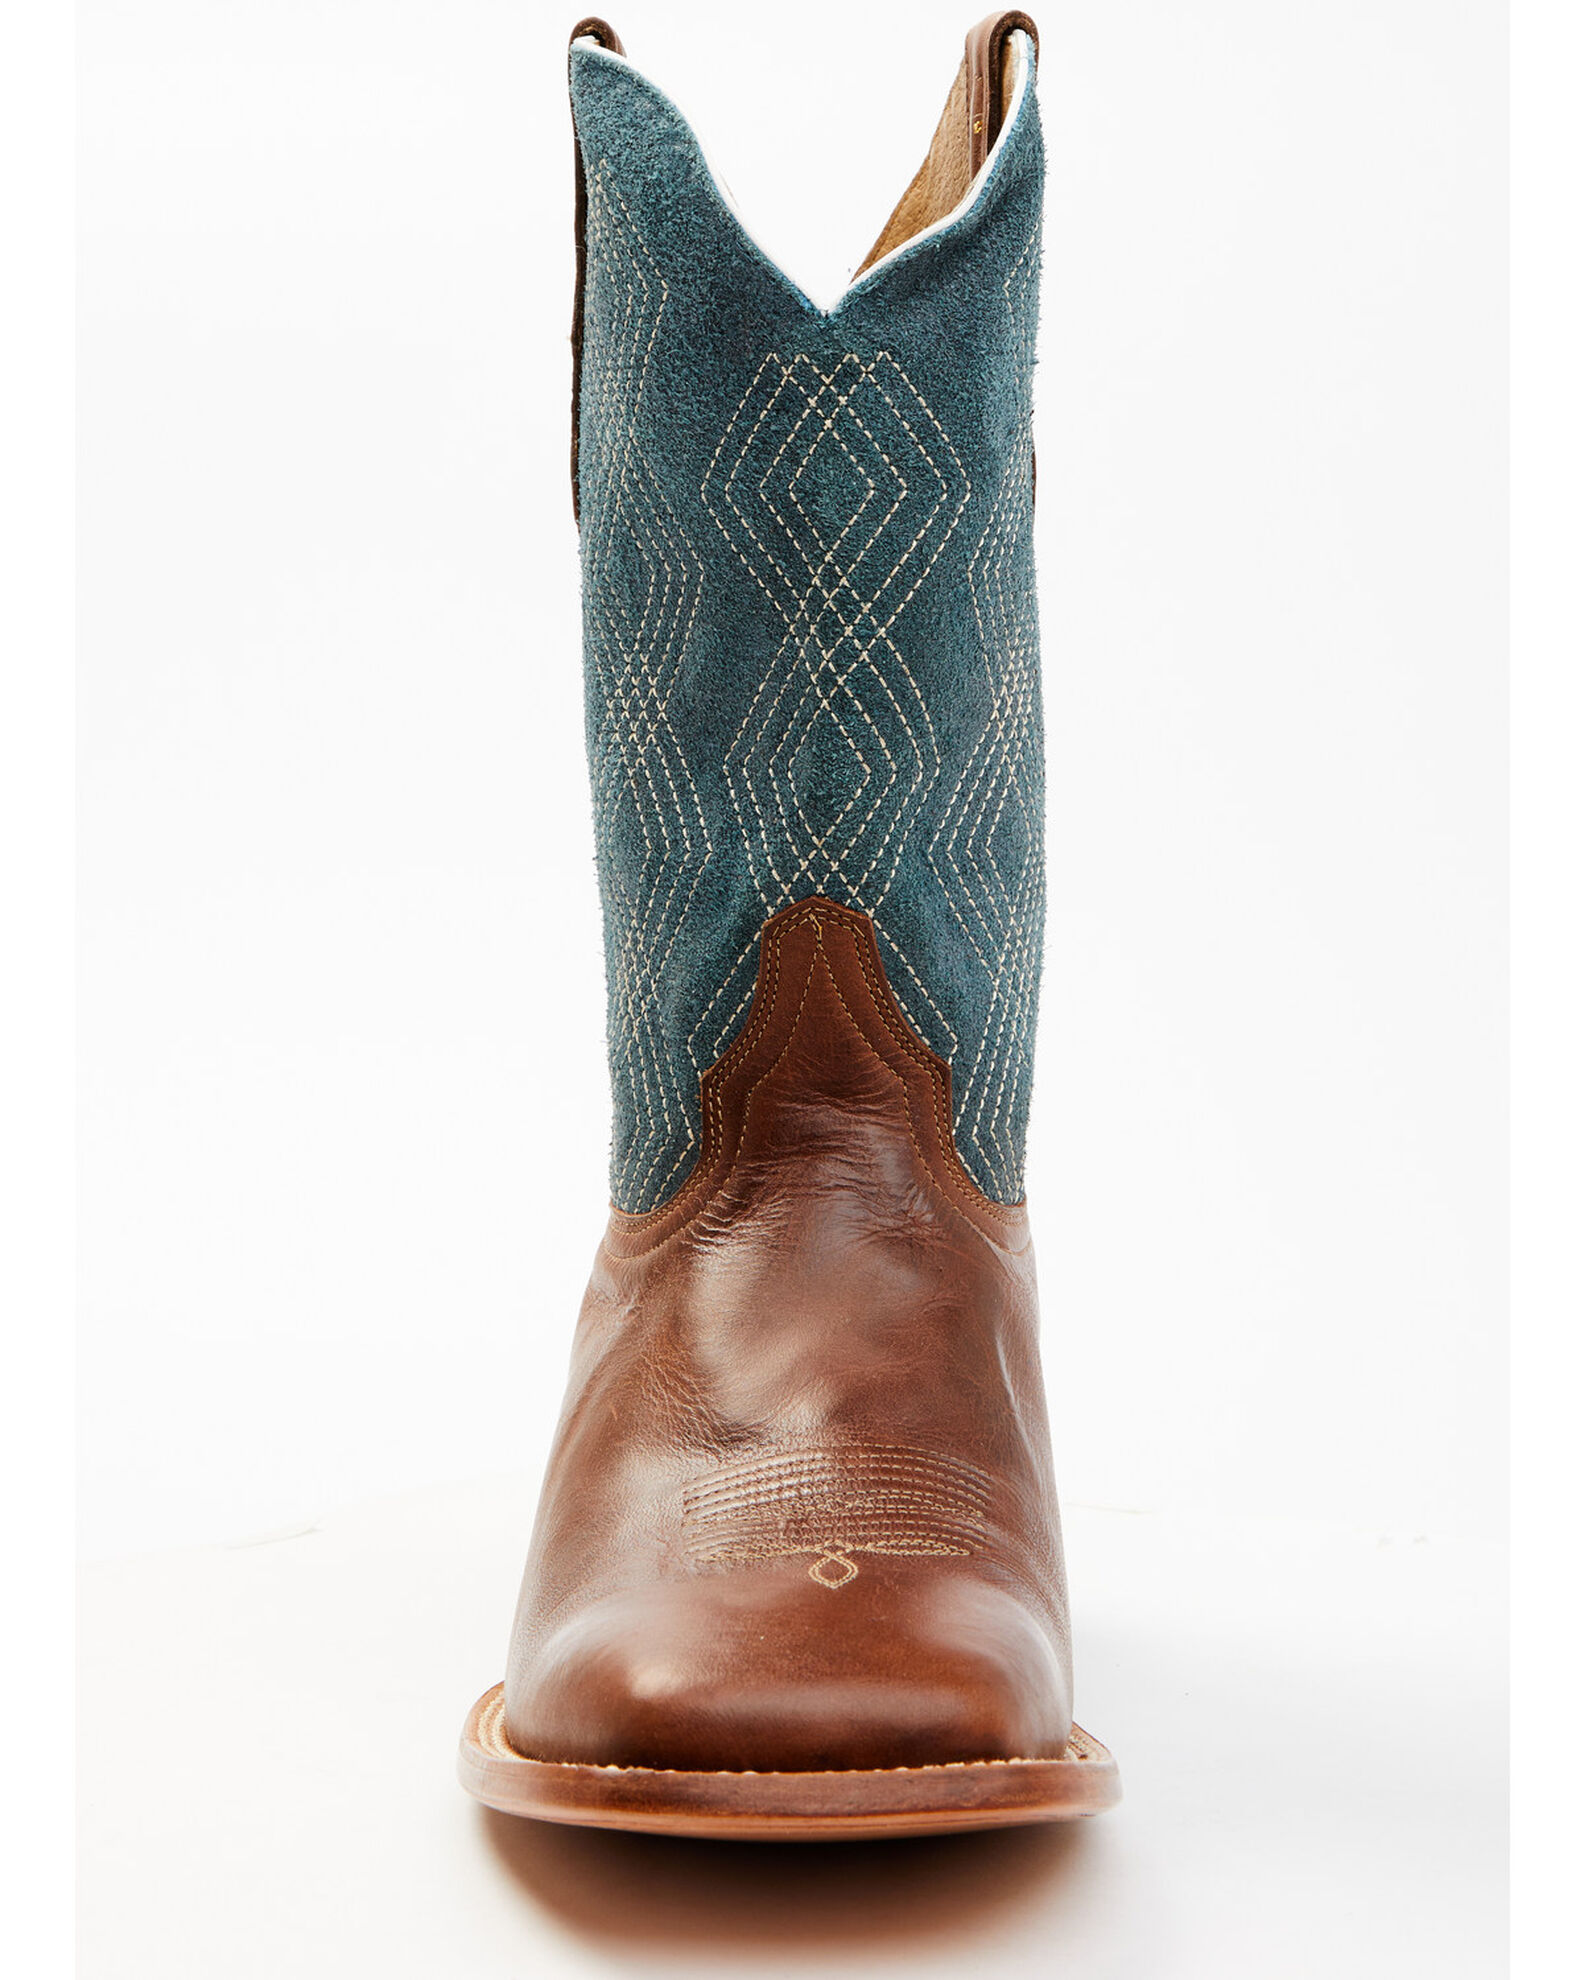 Cody James Men's Shasta Western Boots - Broad Square Toe